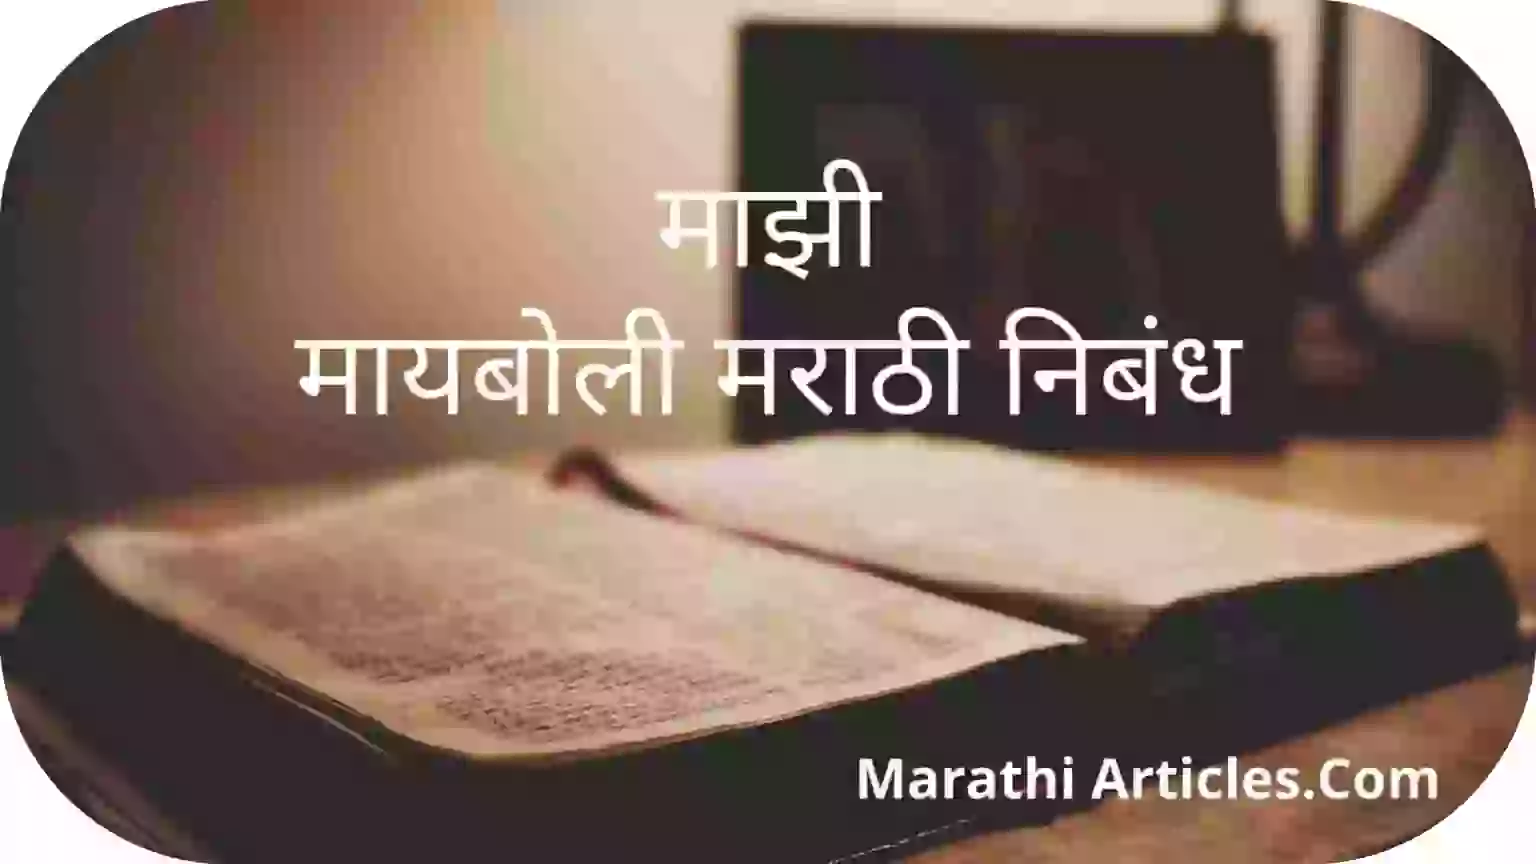 Majhi maayboli marathi nibandh